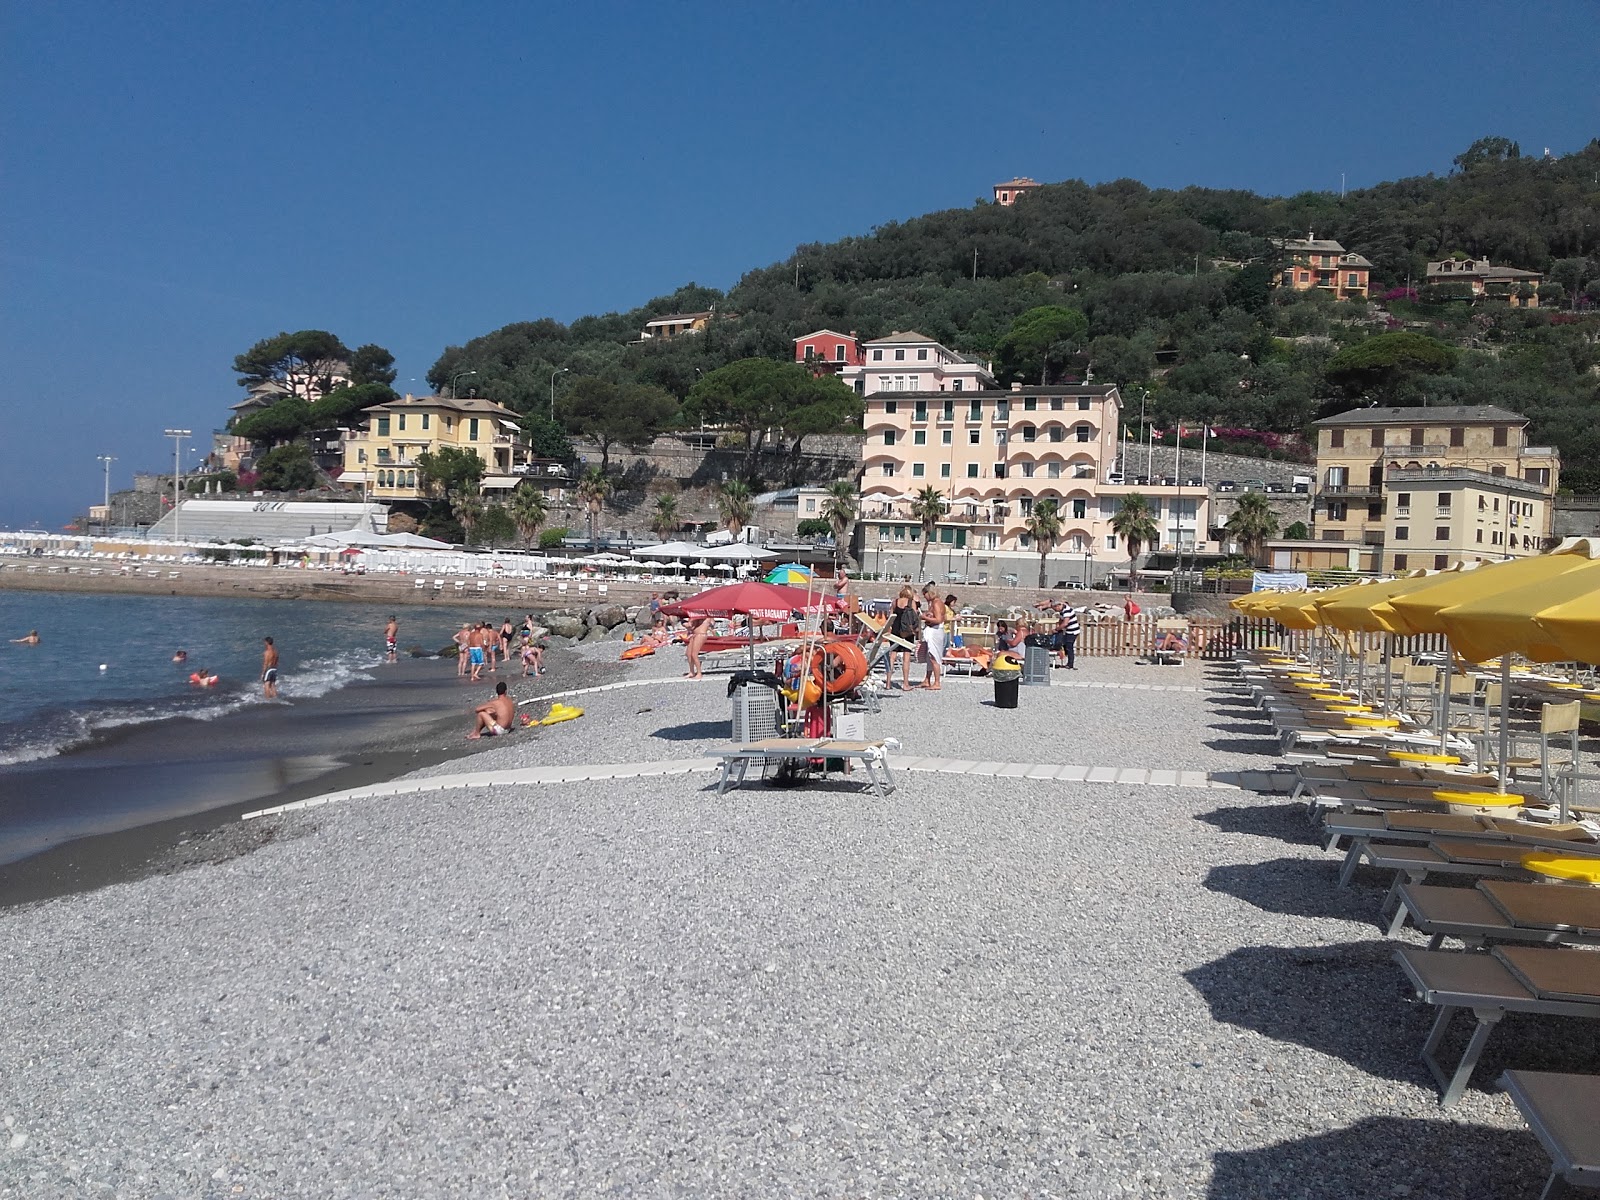 Foto van Spiaggia di Recco met kleine baai